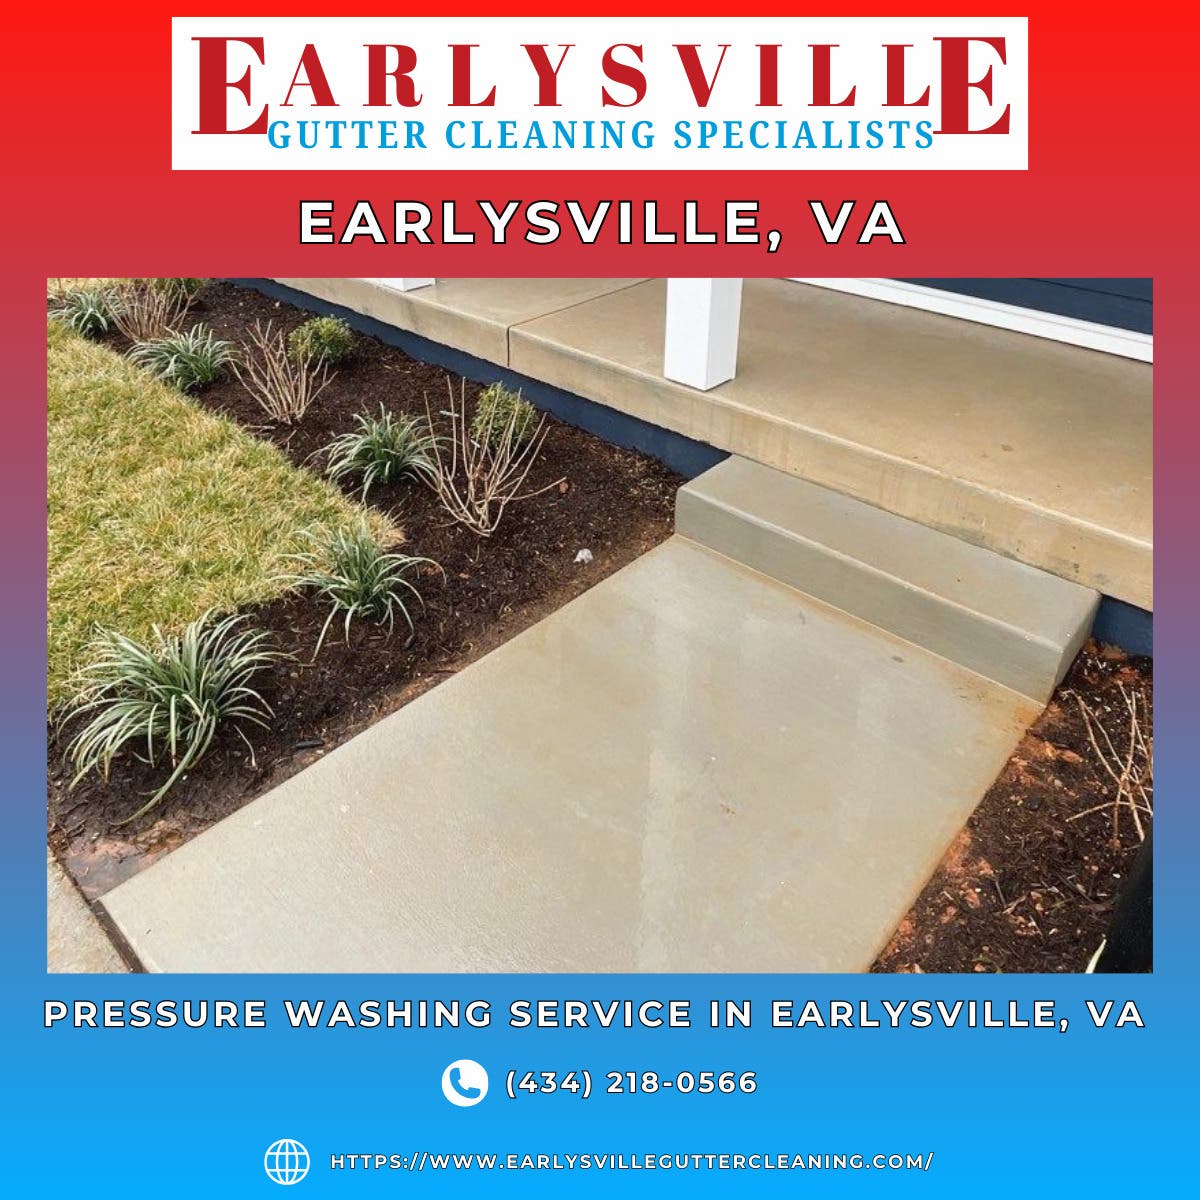 Pressure Washing Service in Earlysville, VA - Earlysville Gutter Cleaning Specialists